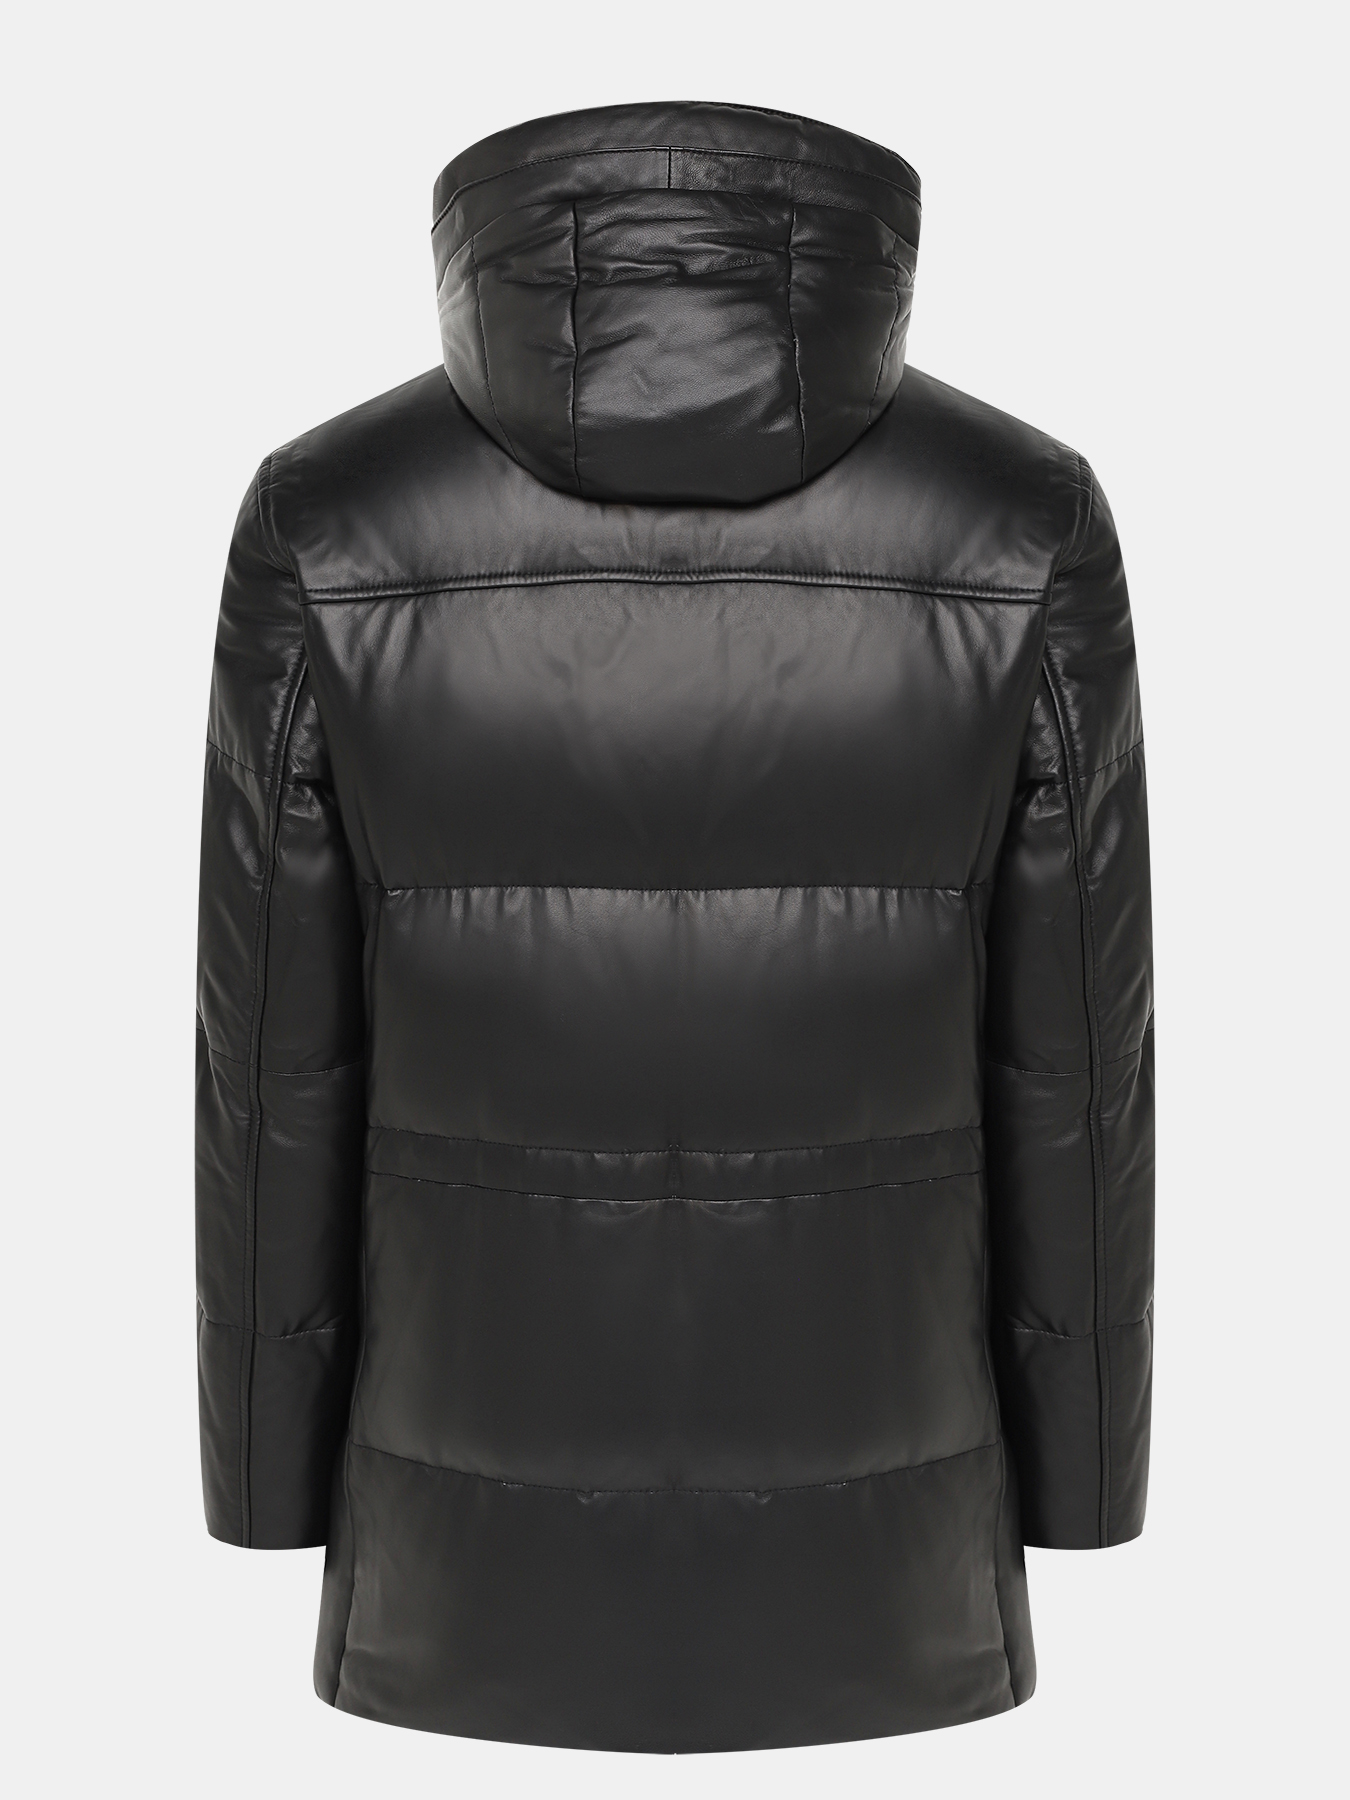 Кожаная куртка Ritter 390990-032, цвет черный, размер 62 - фото 5